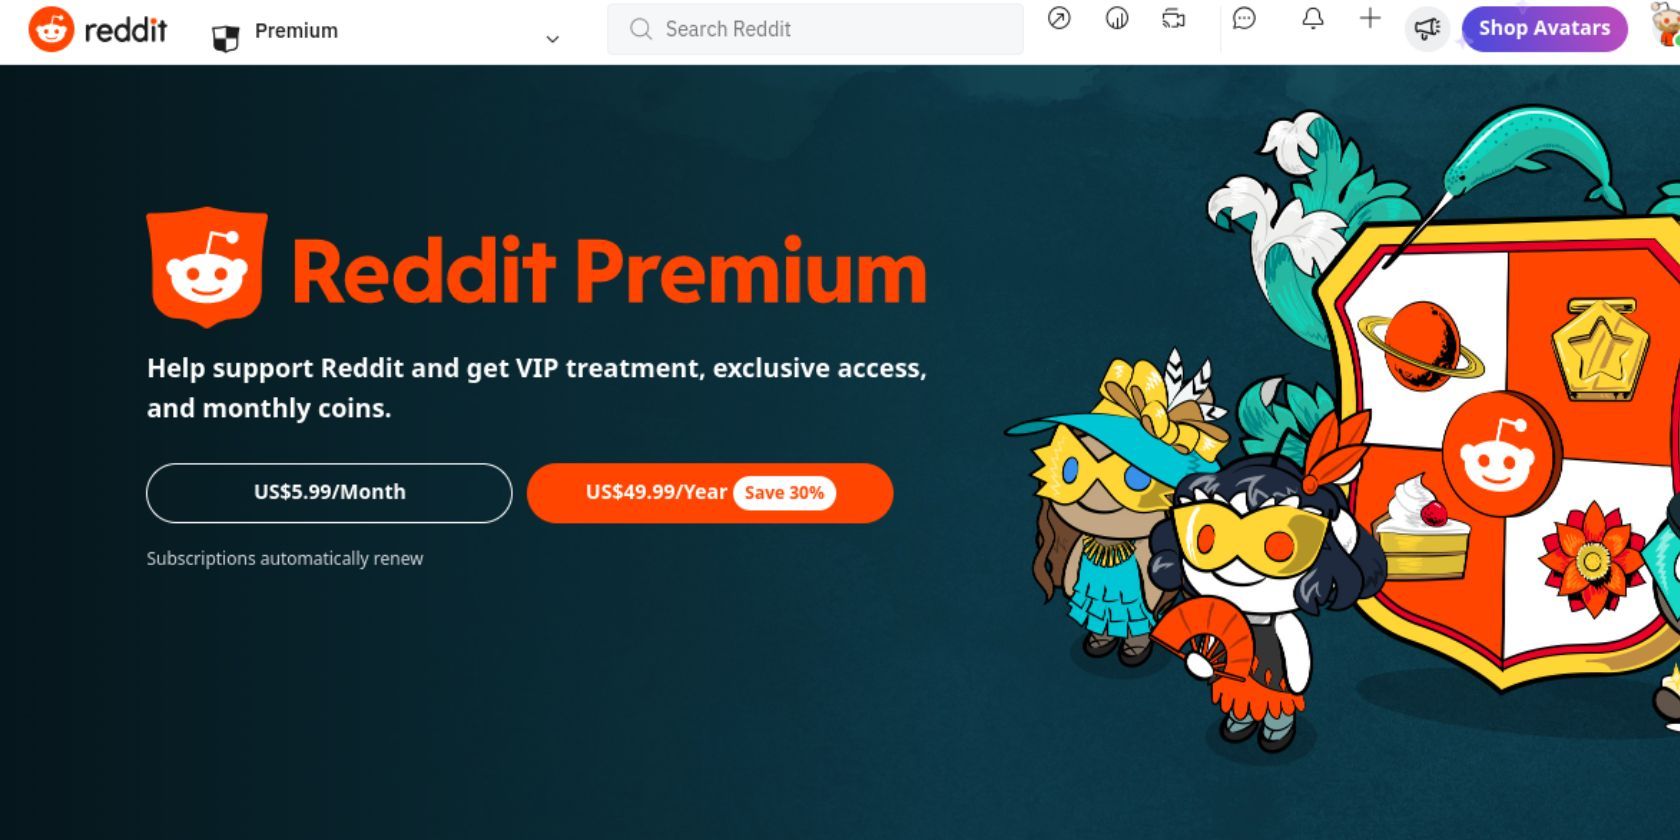 The page for Reddit Premium on the official Reddit website